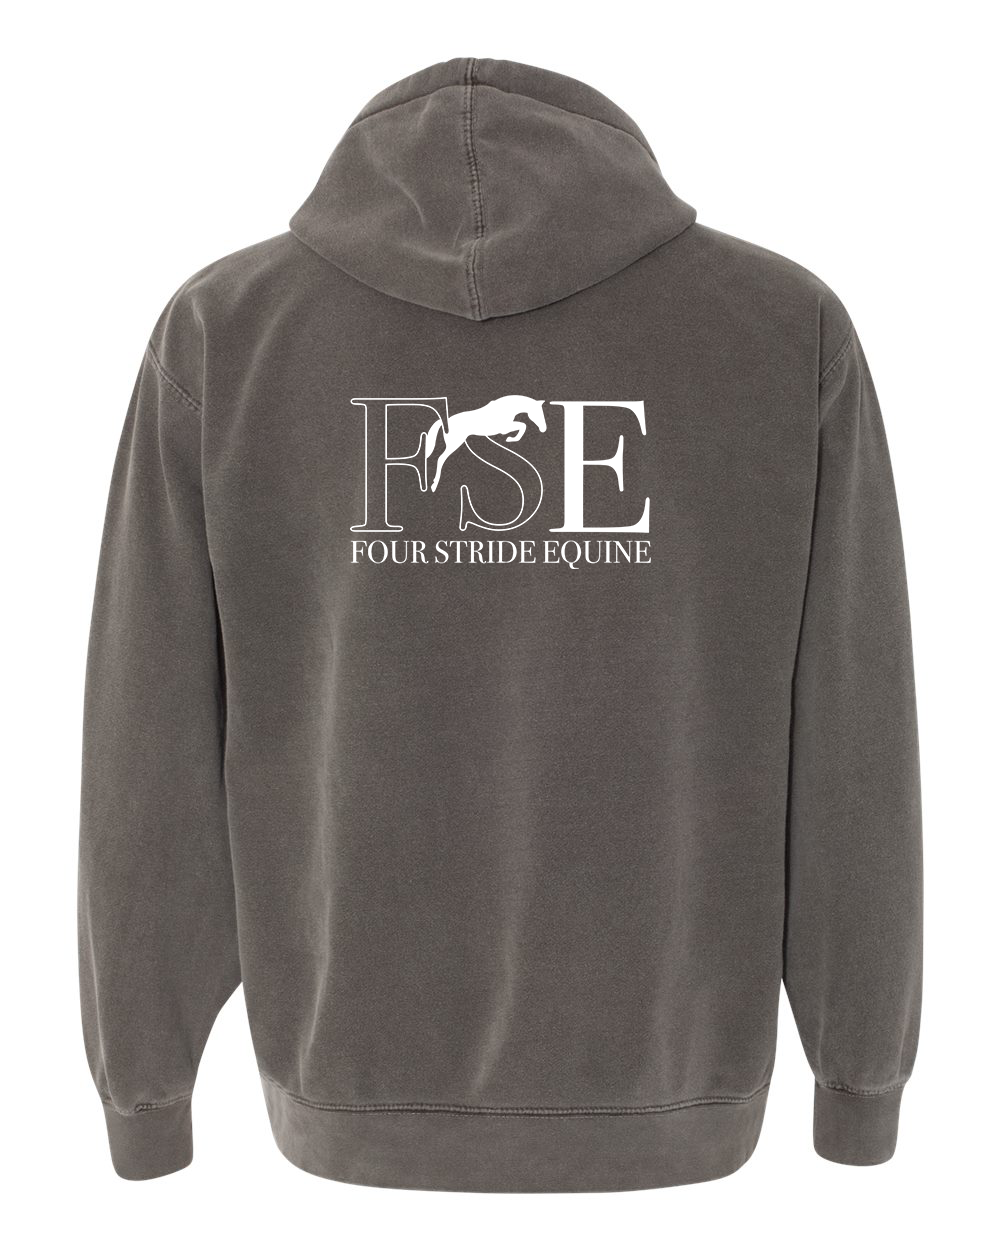 Four Stride Equine - Garment-Dyed Hooded Sweatshirt